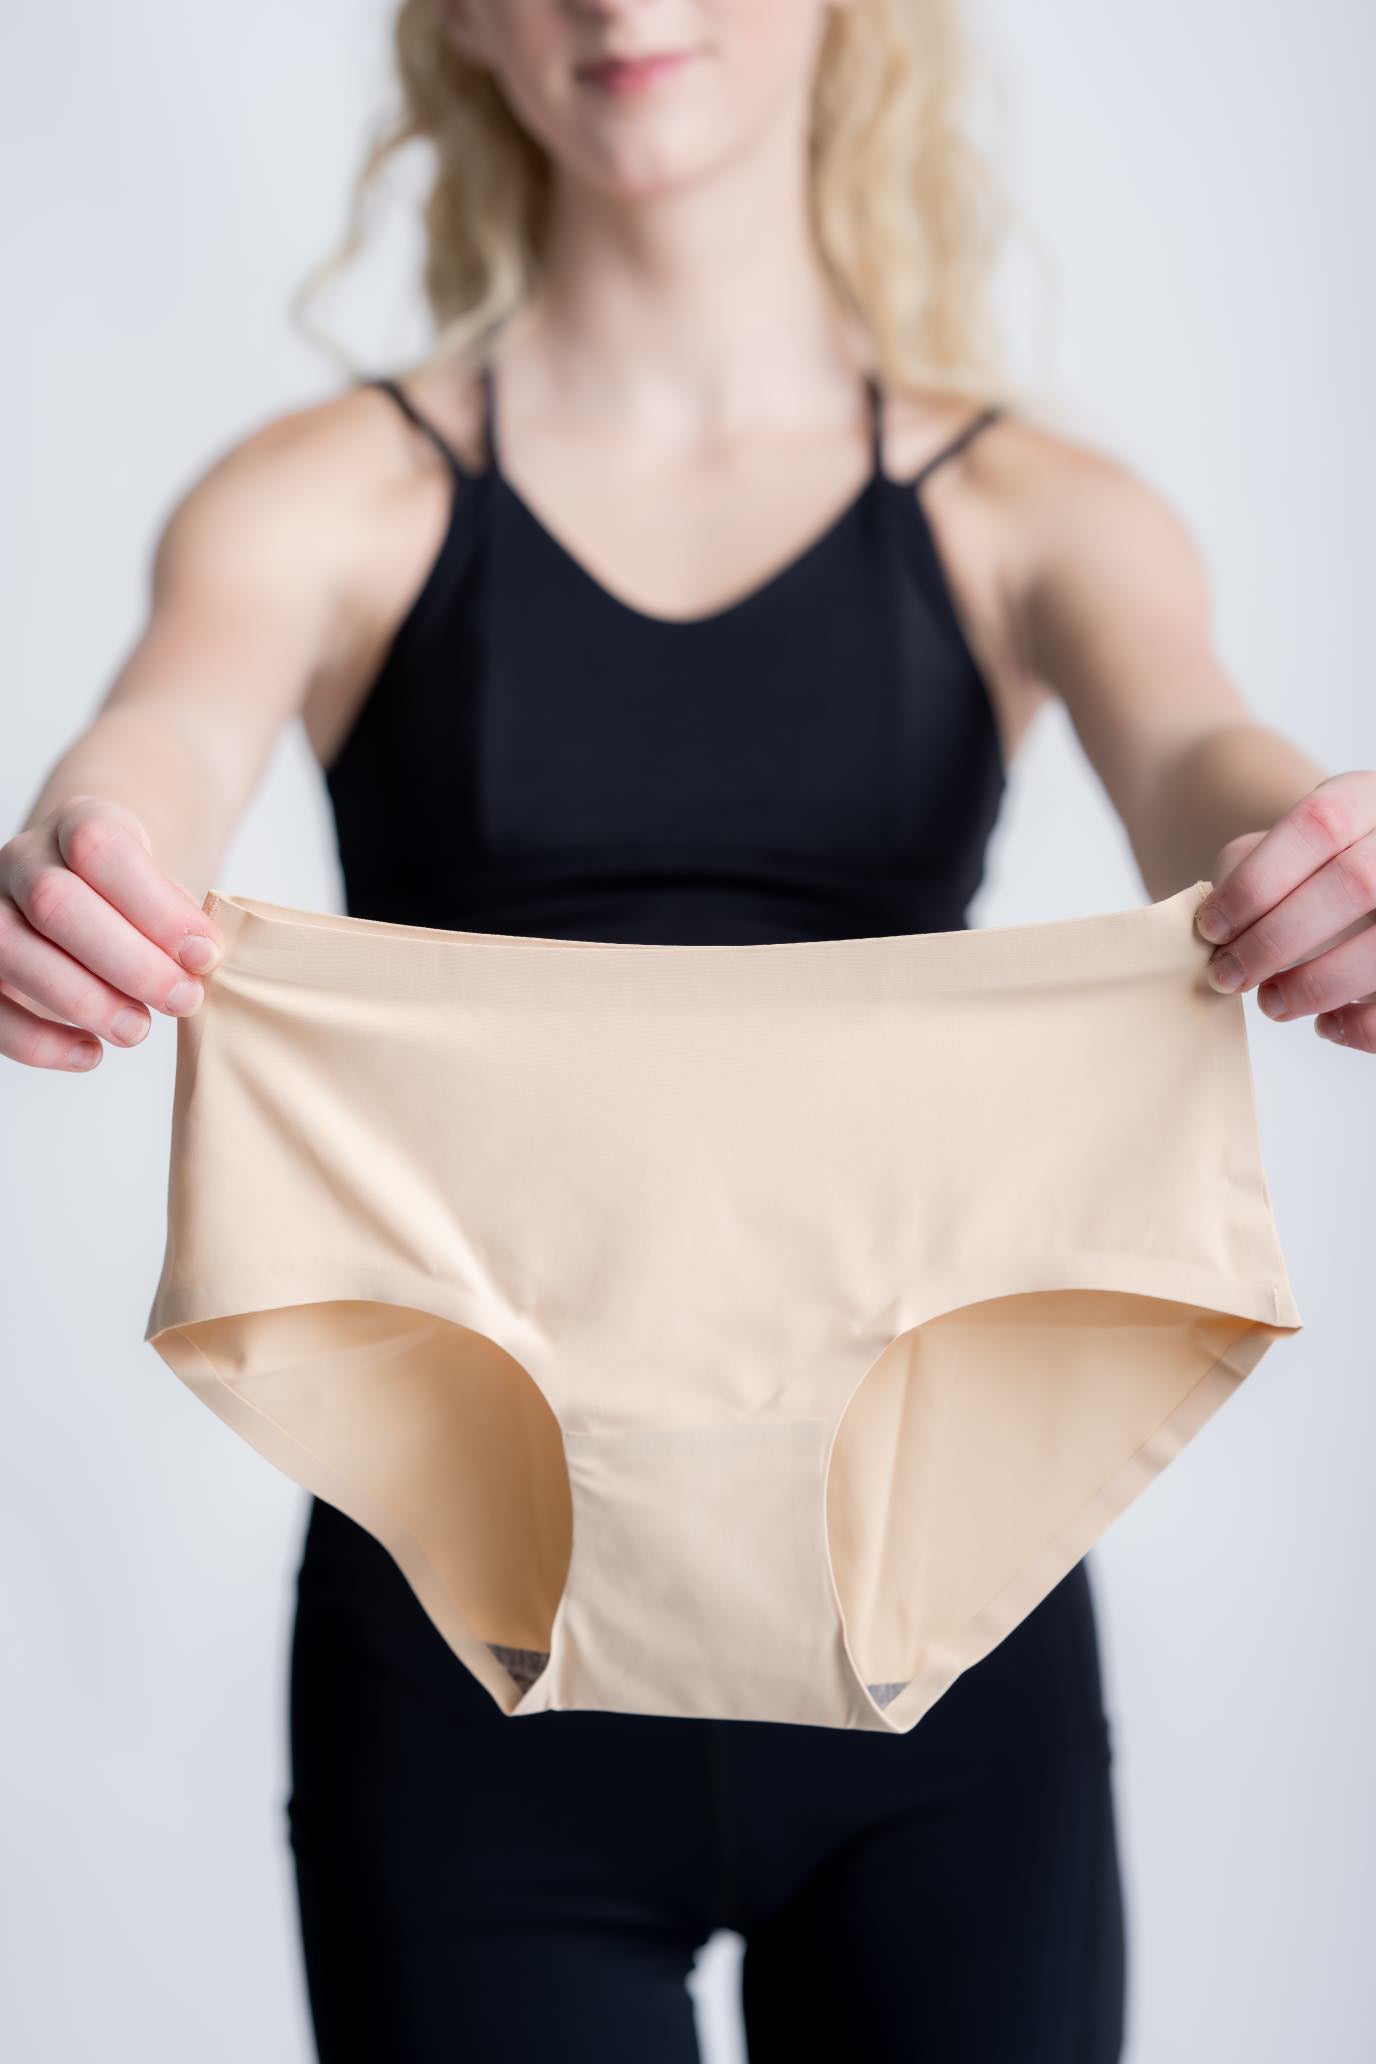 Catman underwear men's seamless briefs, pure cotton, breathable